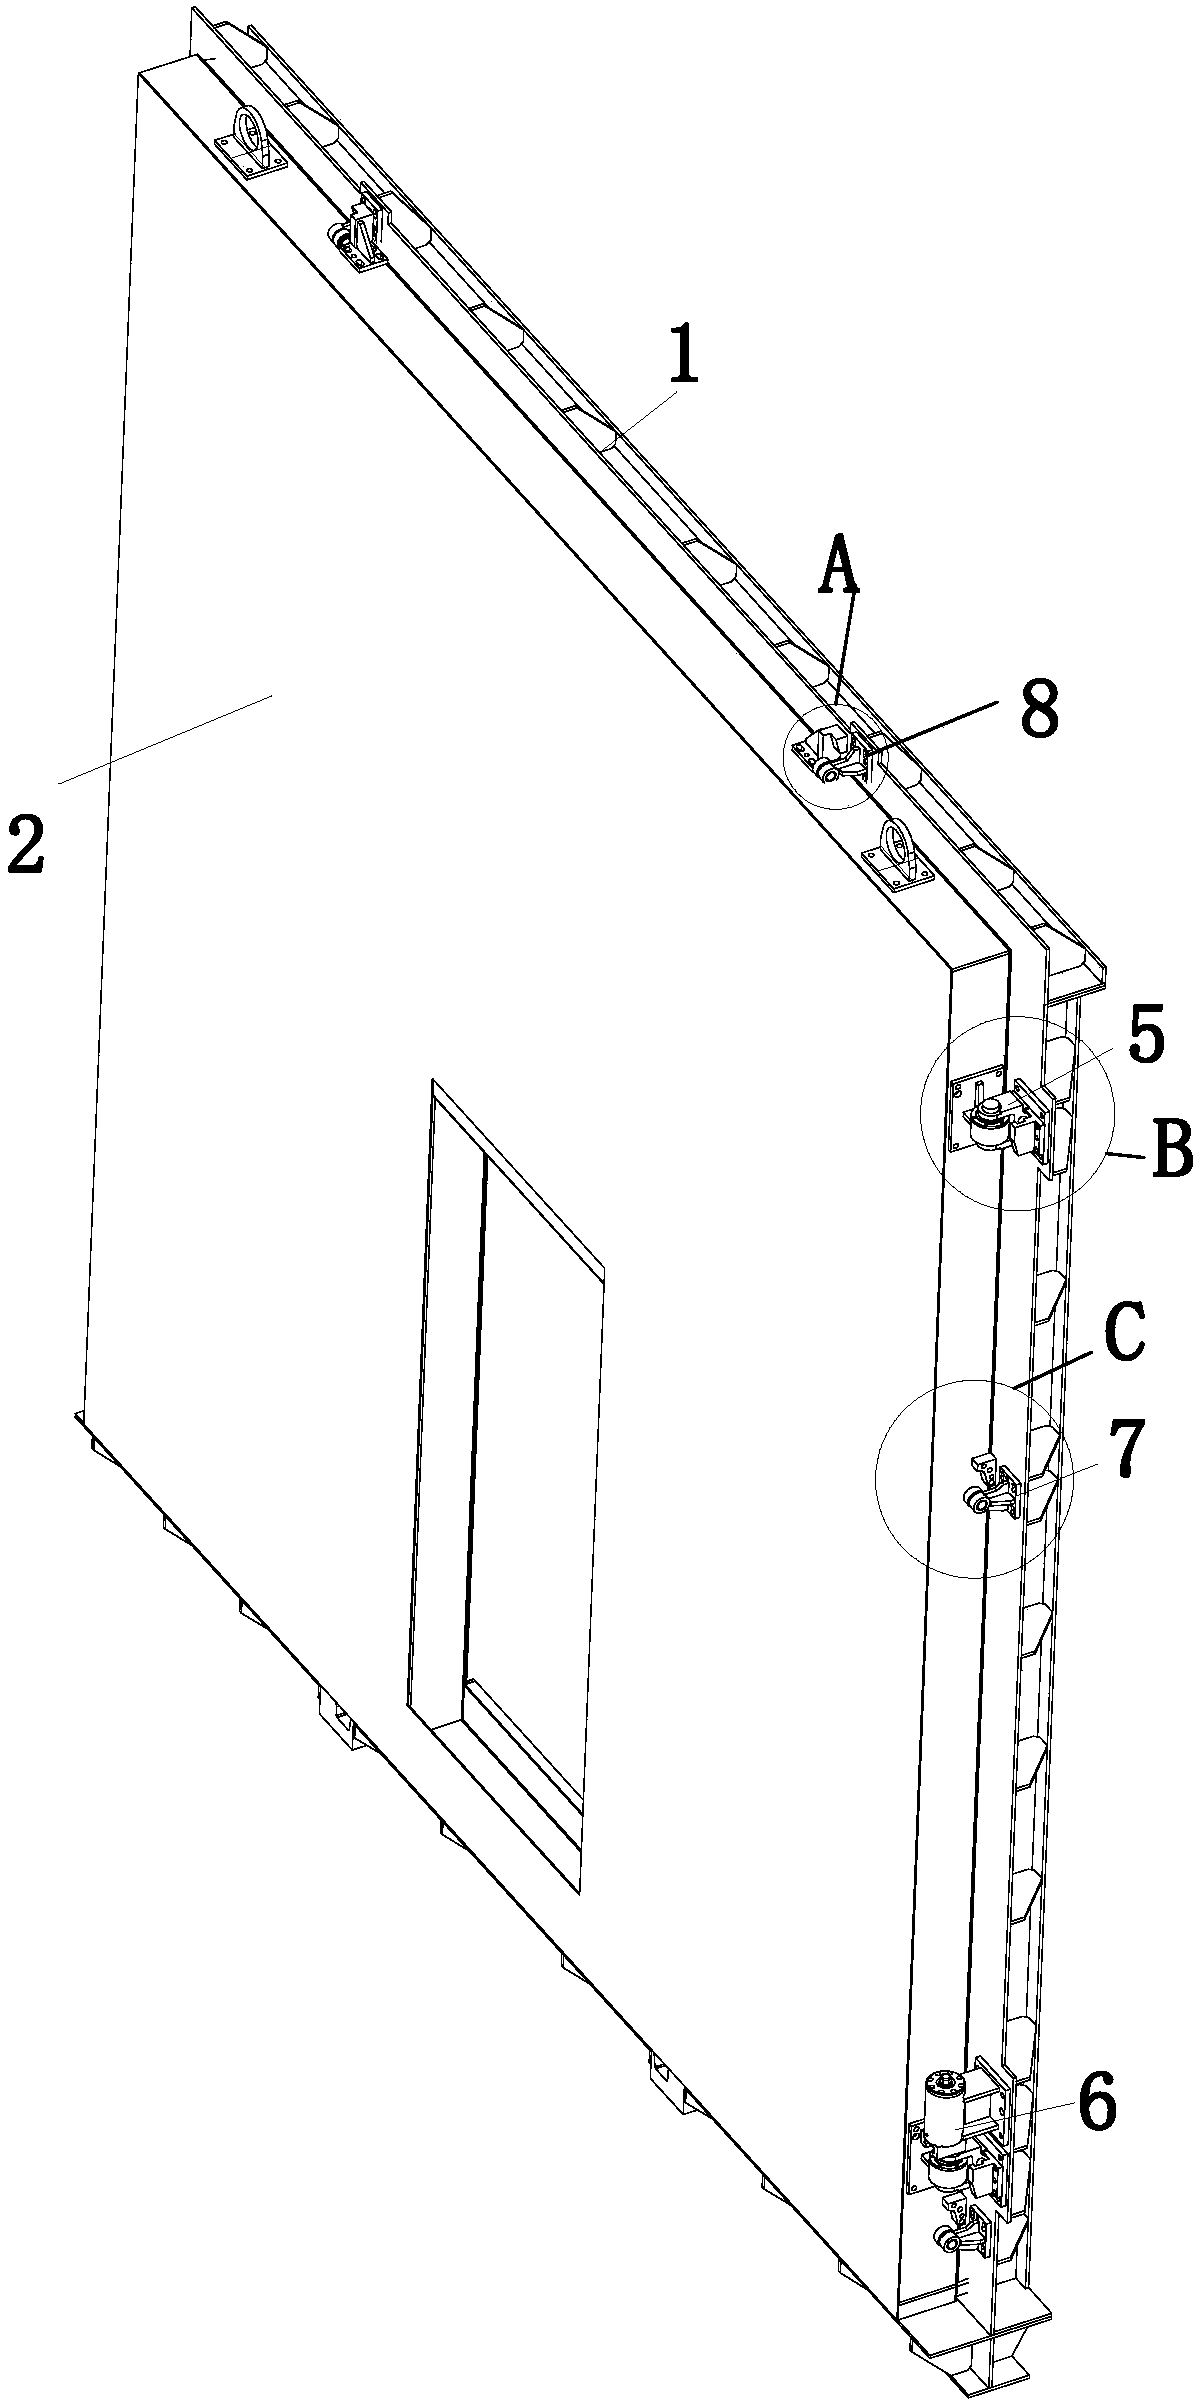 Lifting horizontal-moving-type air-tight door